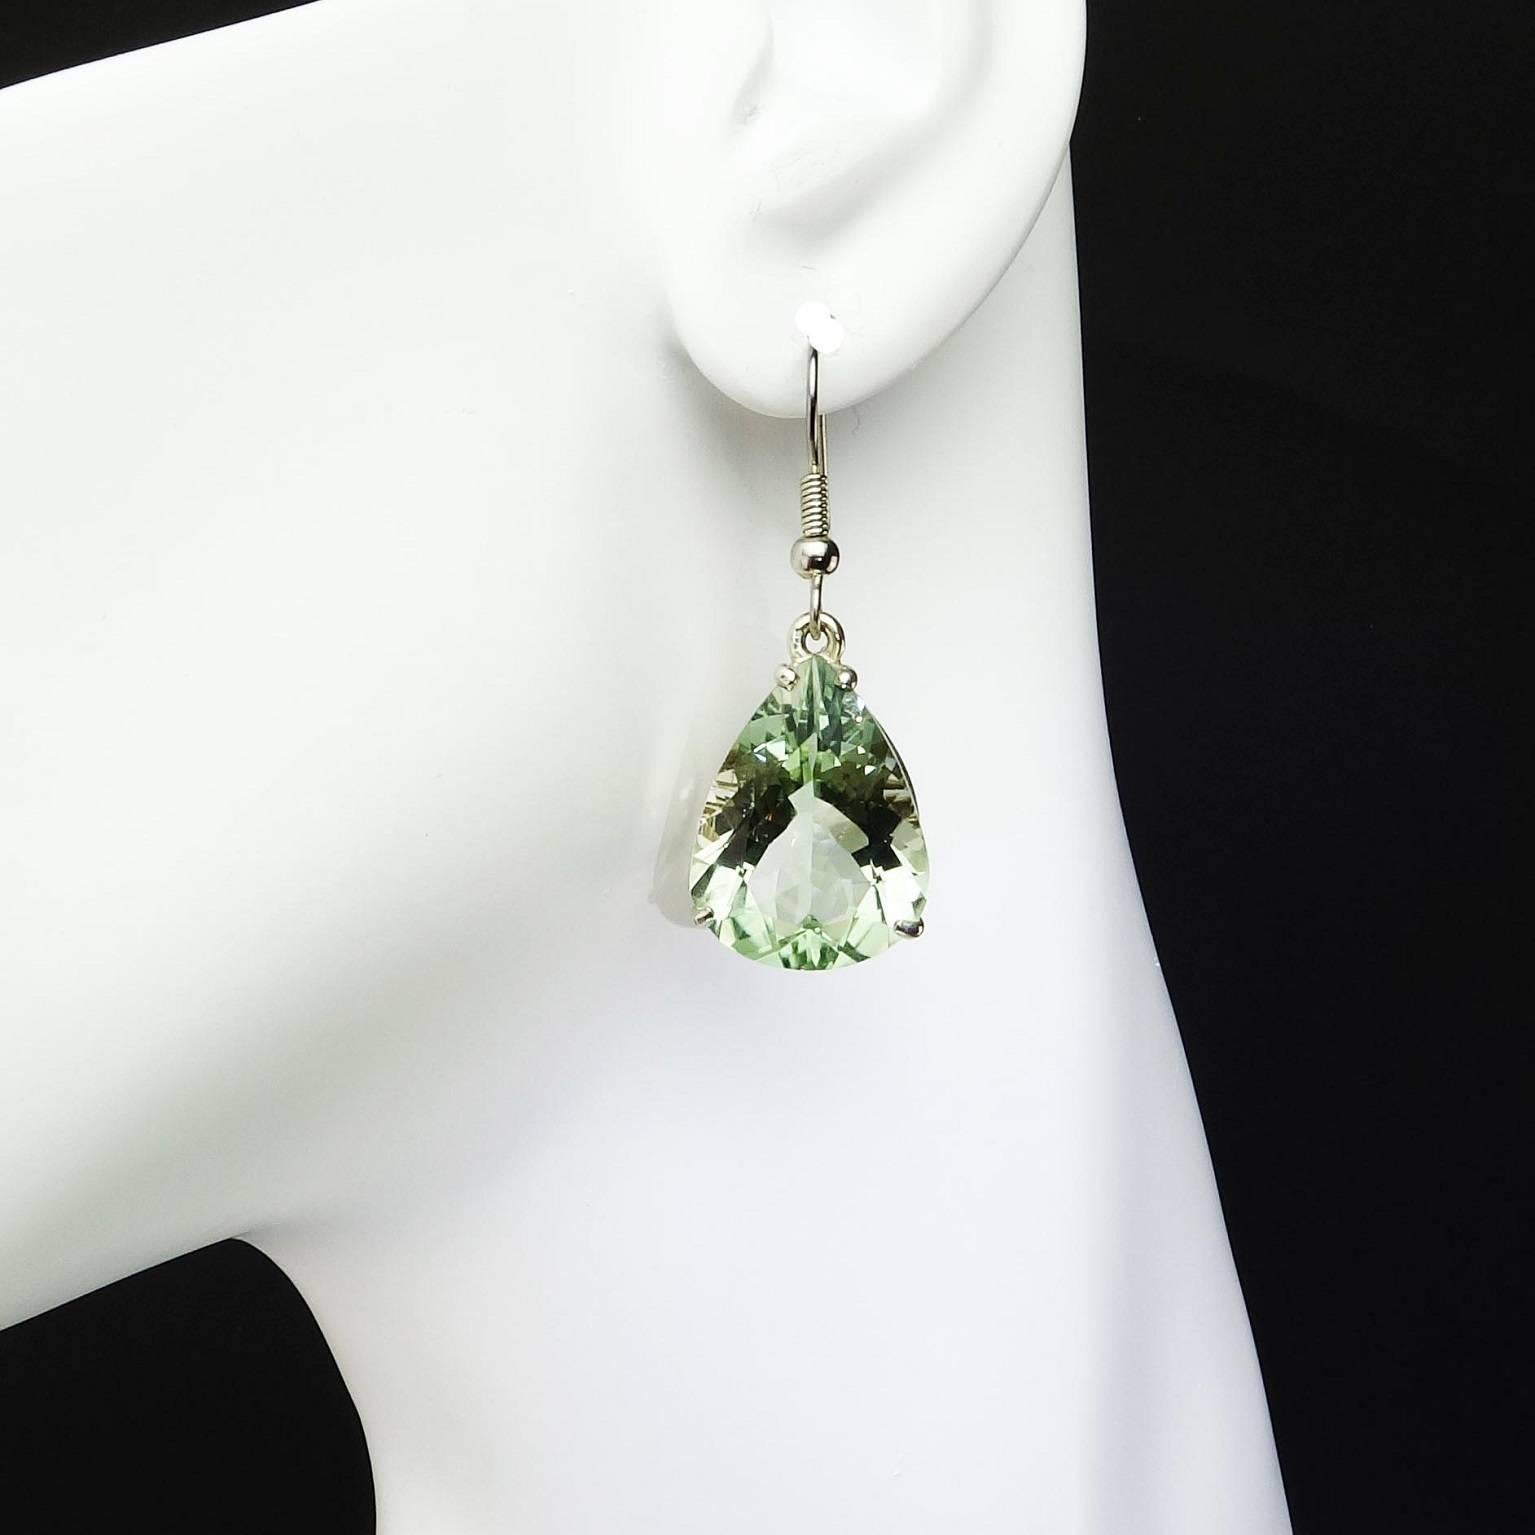 Delightful soft, sparkling green gem cut Prasiolites (green Amethyst Quartz) dangle earrings.
Size: 38 mm long
Sterling Silver French hook and setting.